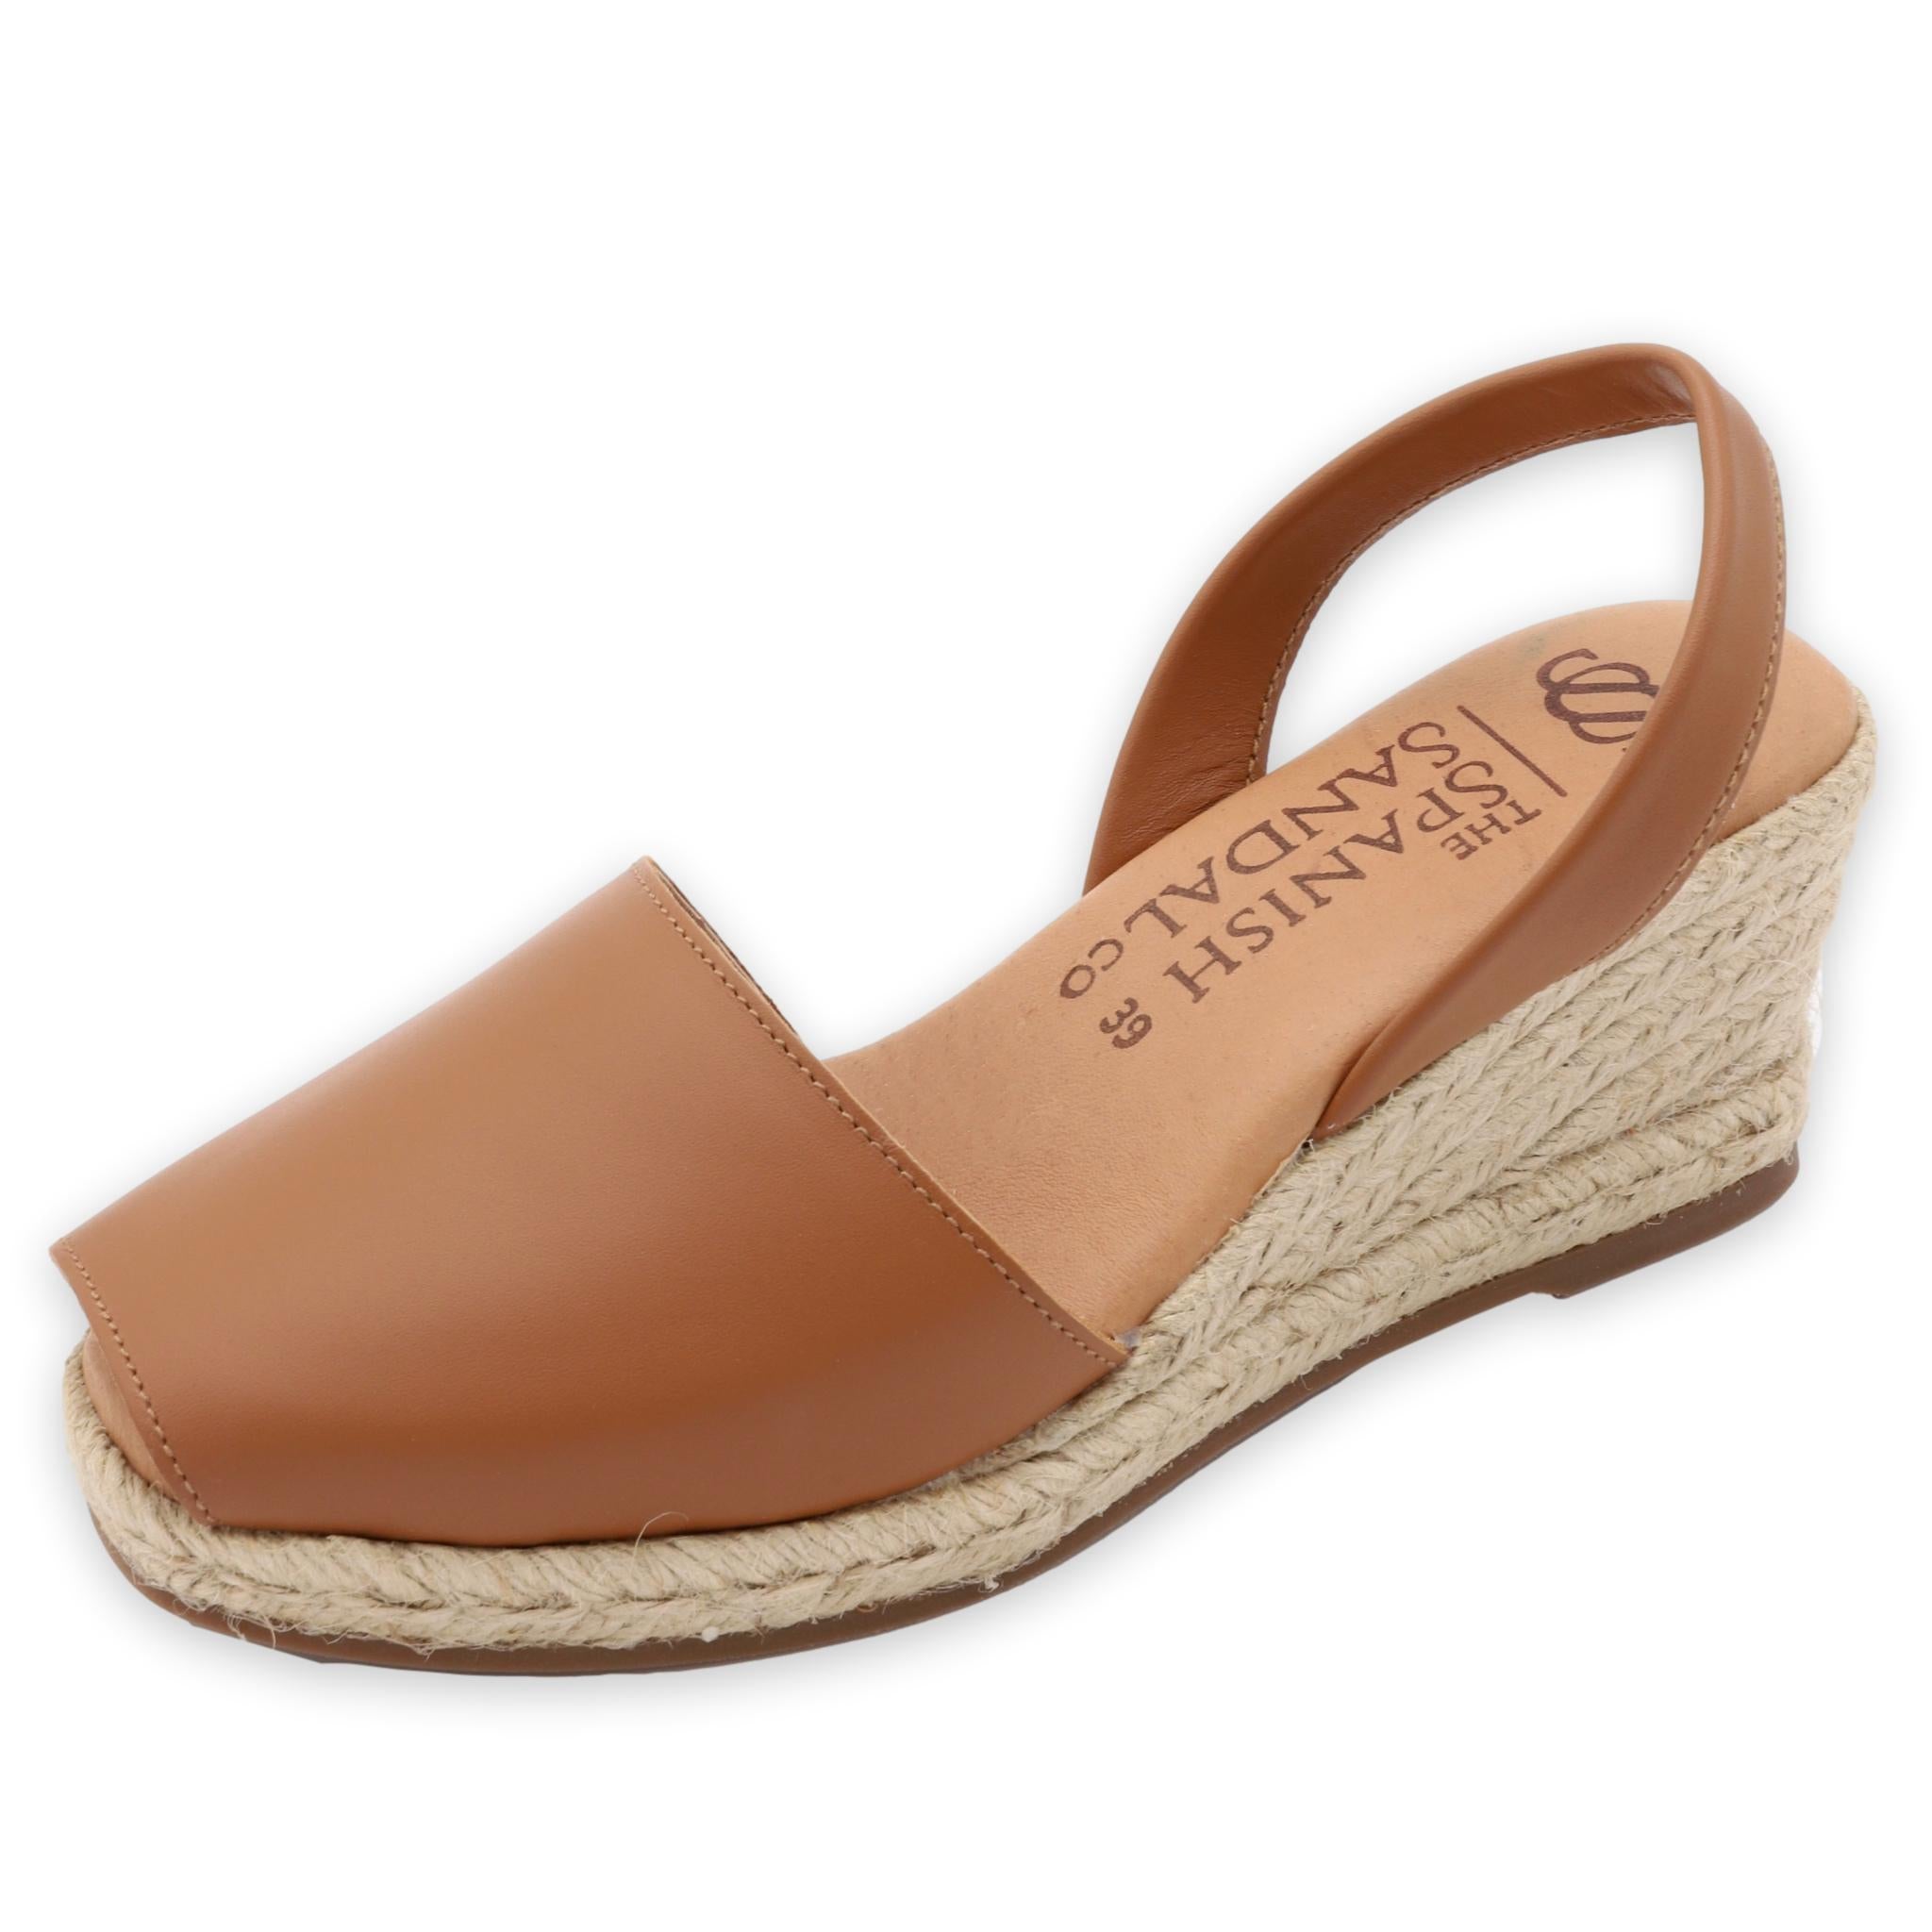 espadrille sandals - The Spanish Sandal Company